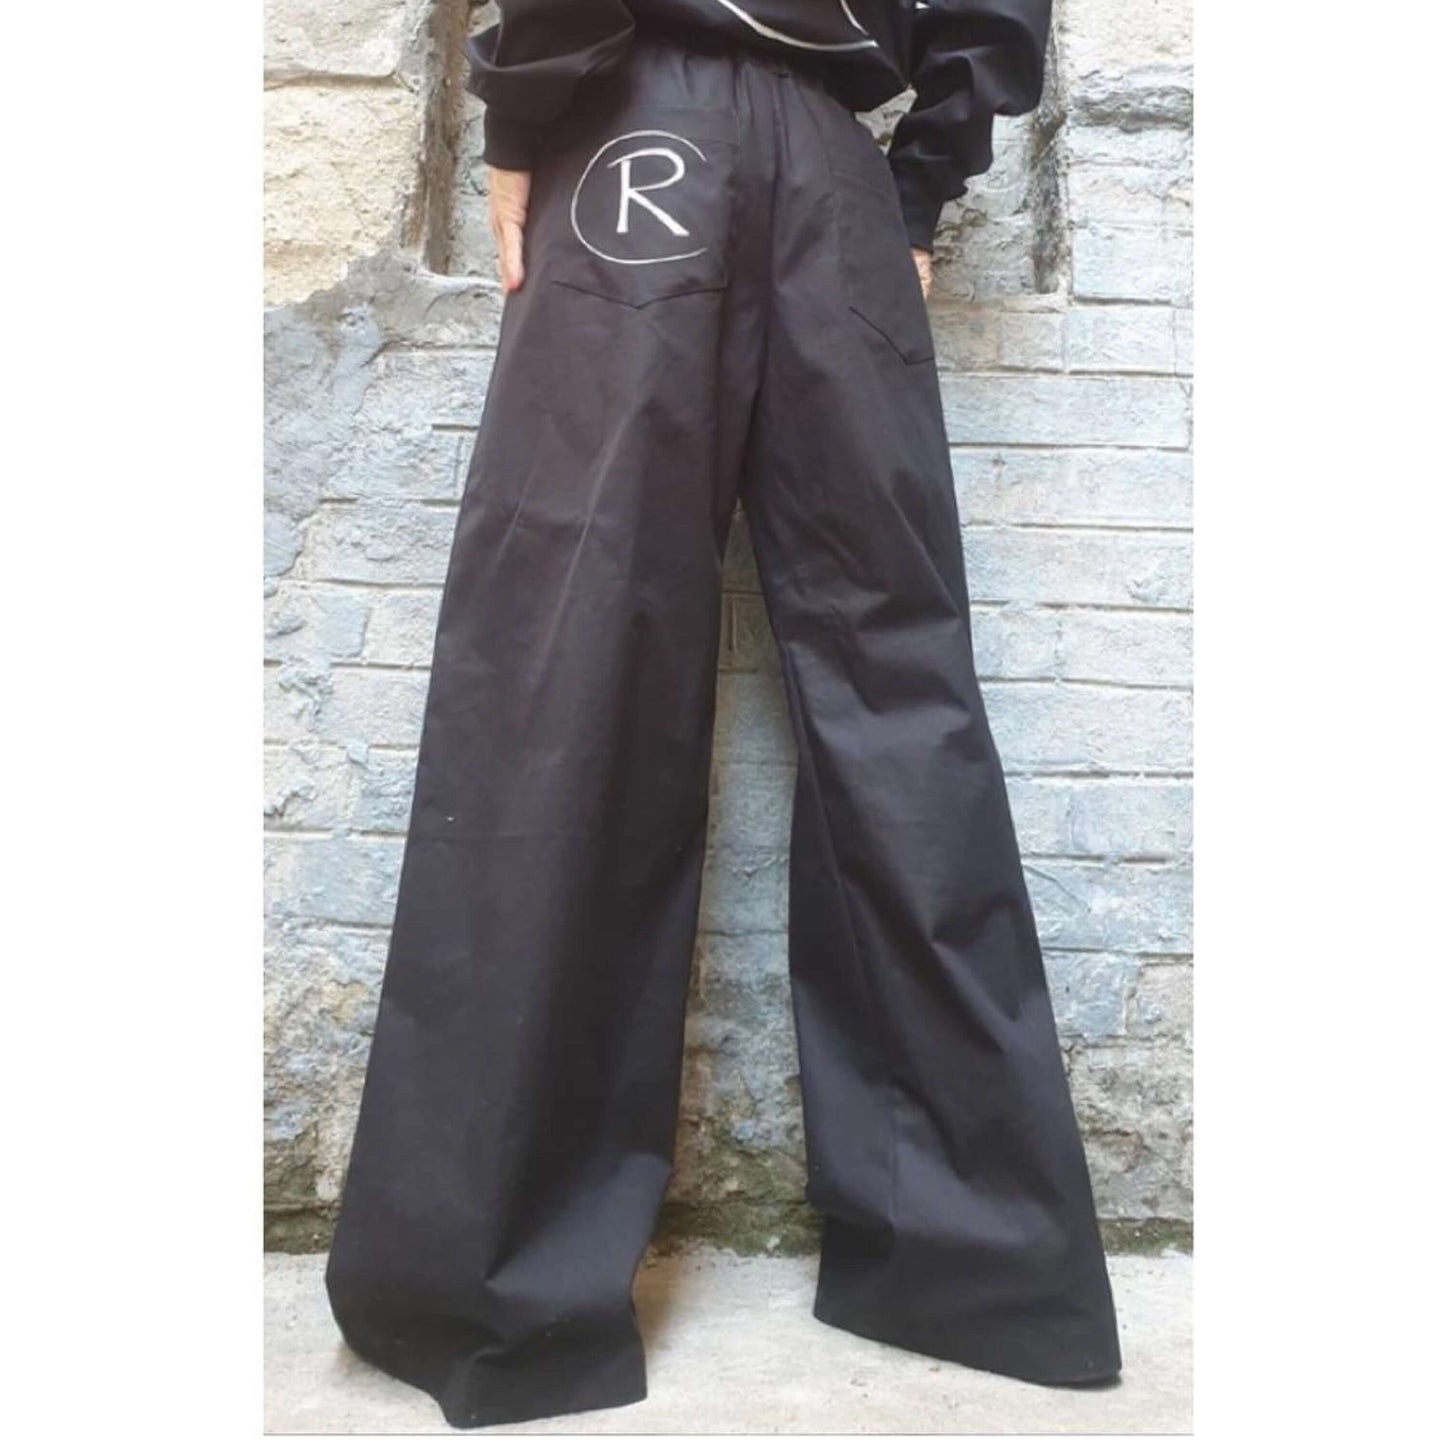 Extravagant Wide Leg Pants - Handmade clothing from AngelBySilvia - Top Designer Brands 